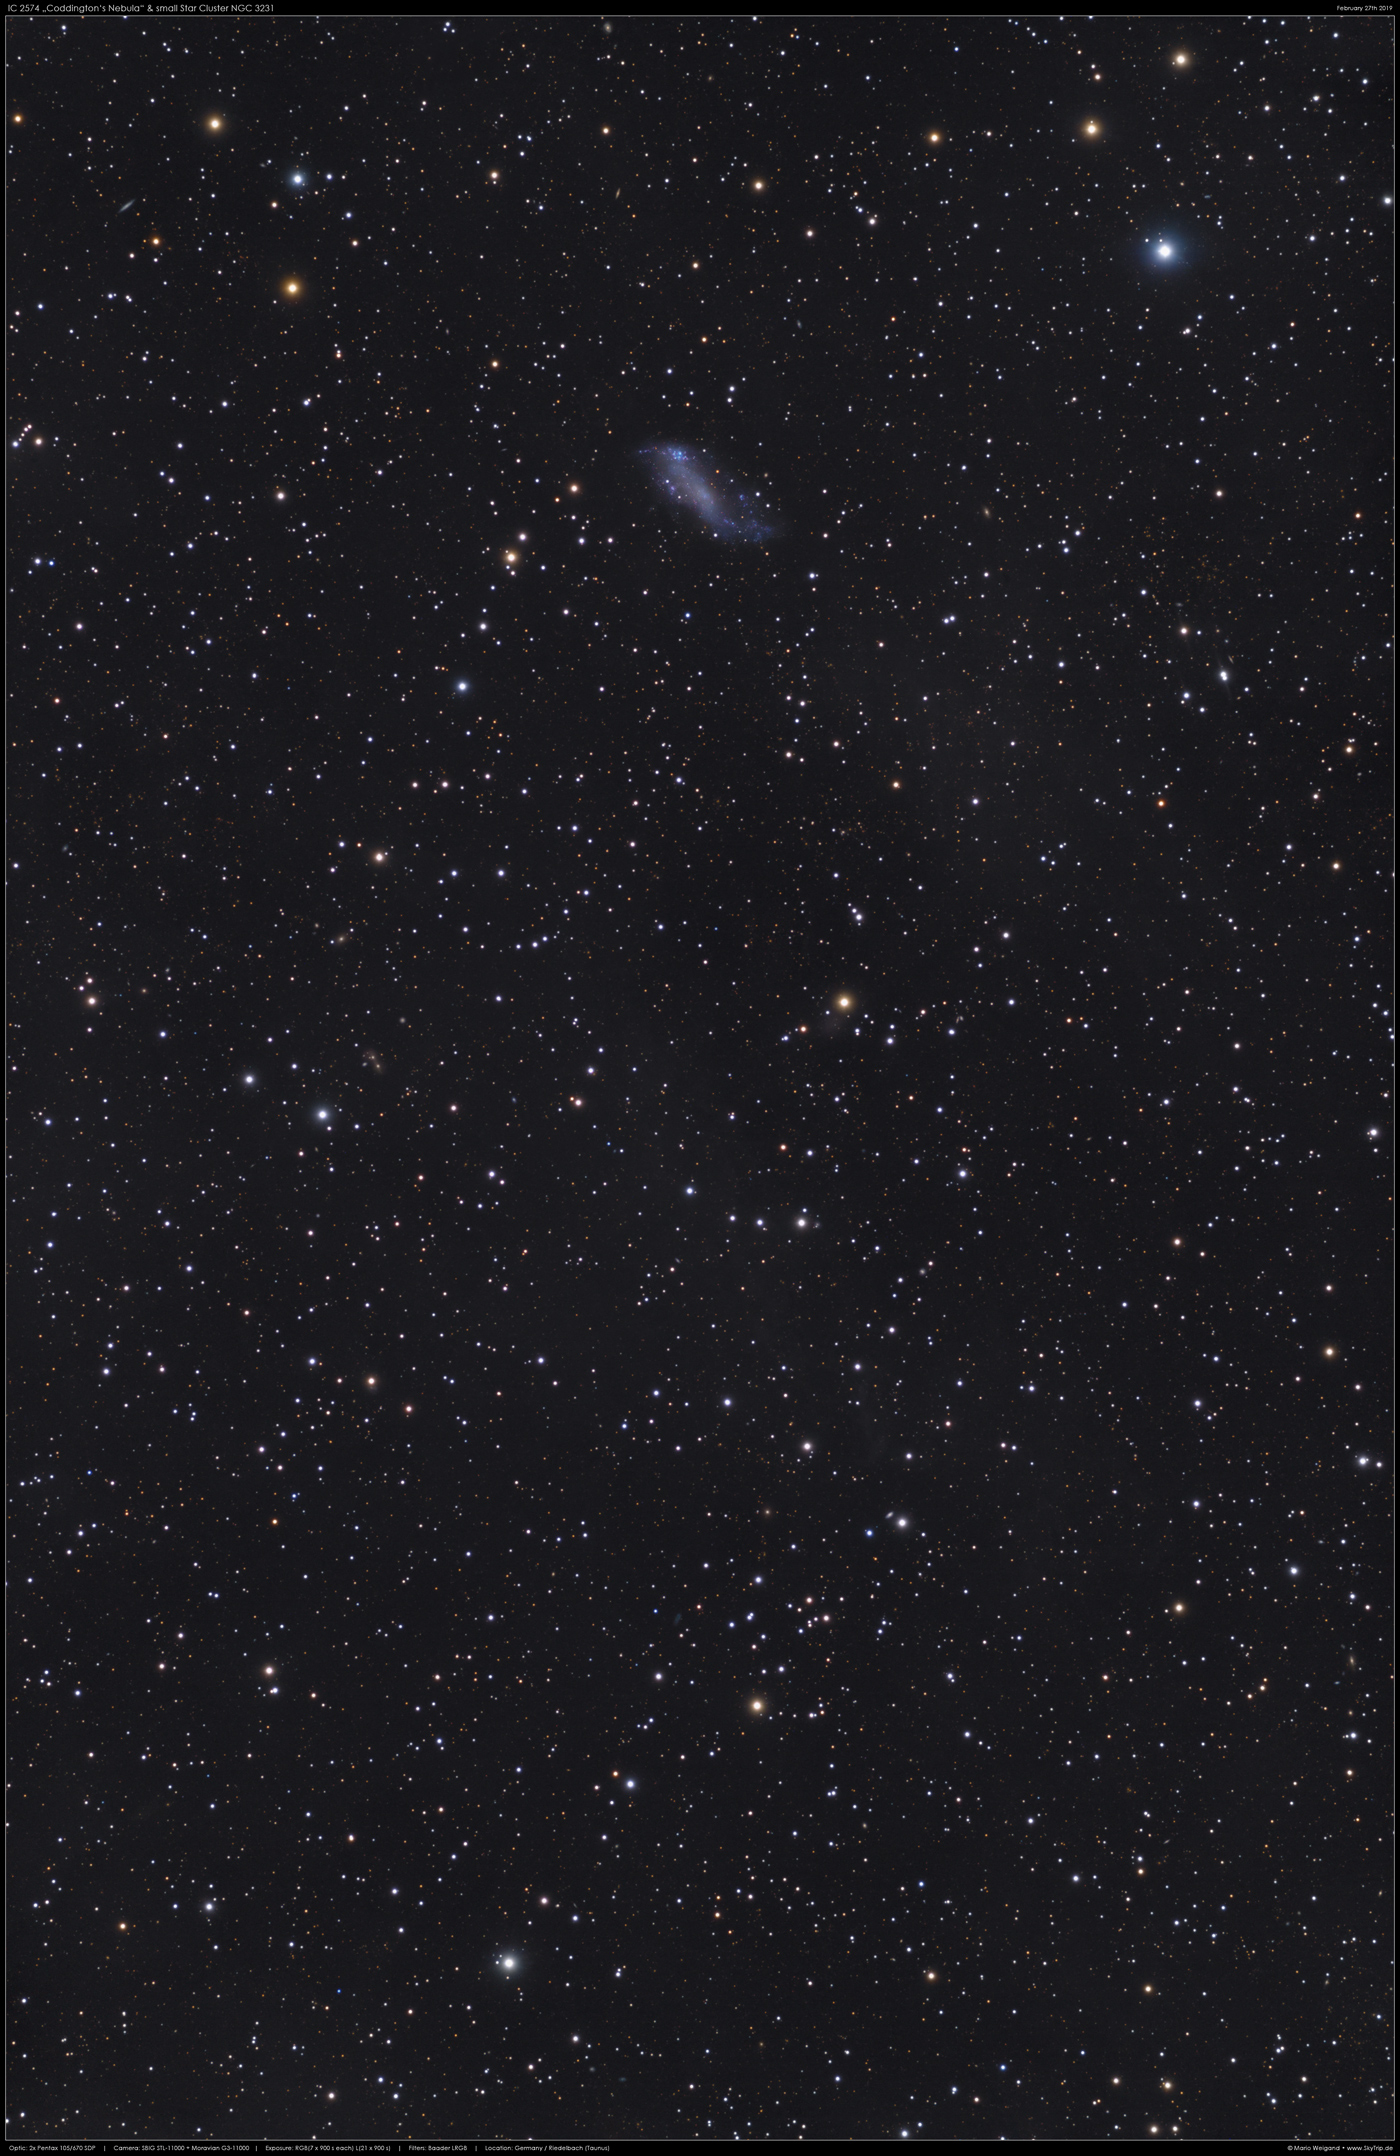 Coddington's Nebula IC 2574 & NGC 3231